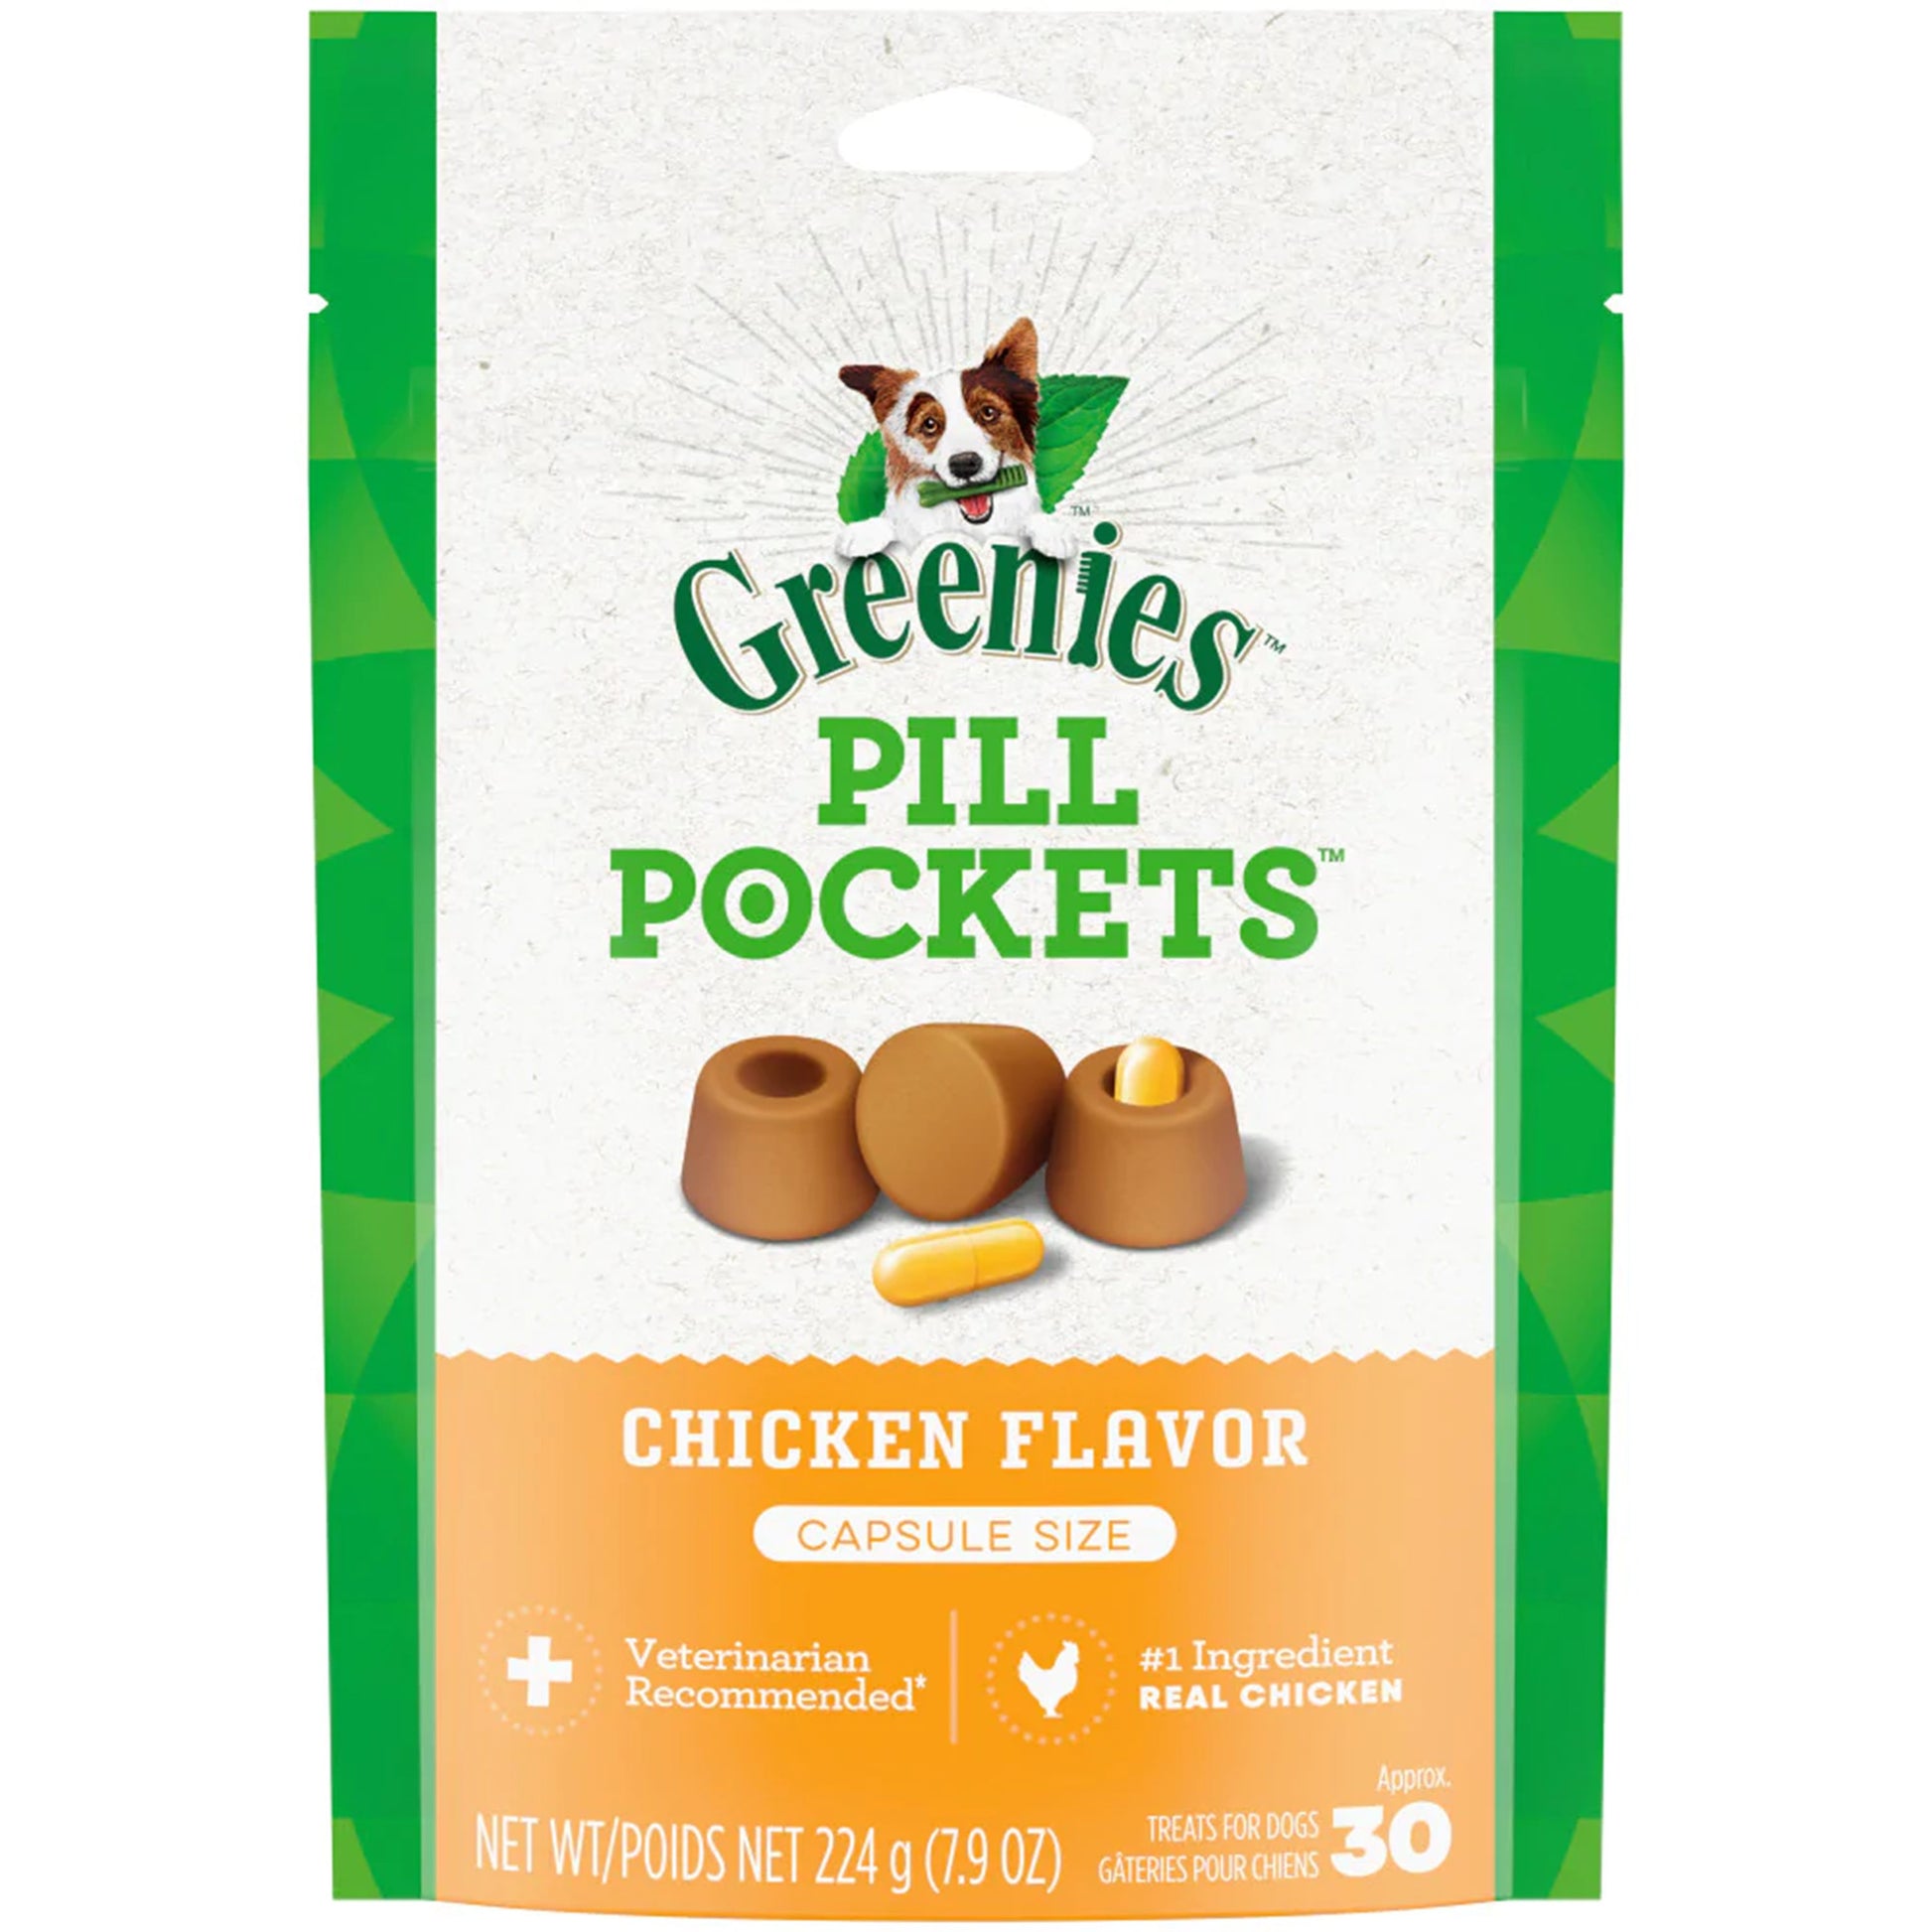 GREENIES PILL POCKETS Treats Chicken Flavor Capsule Size 7.9-oz, Greenies